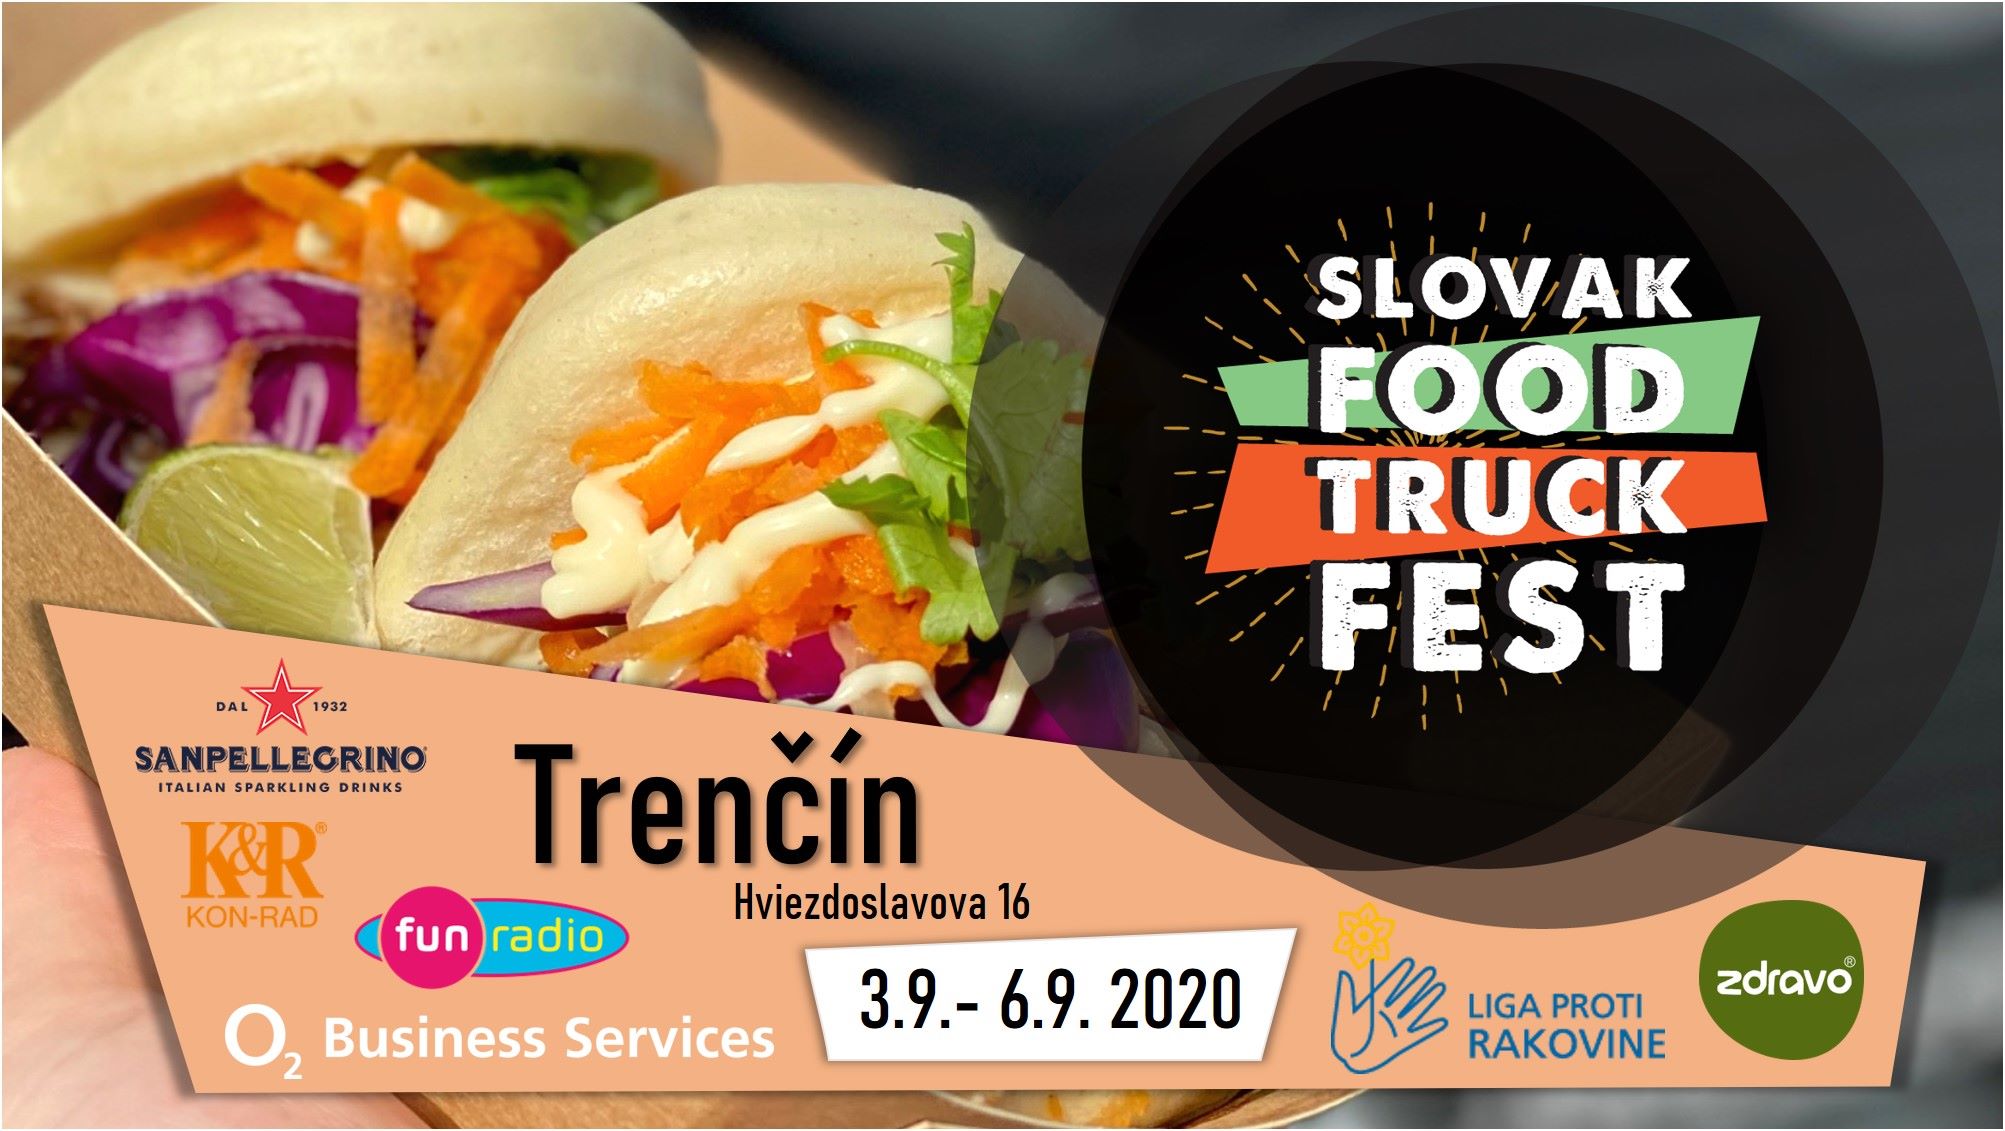 Slovak Food Truck Fest - Trenčín NO.2 Dom armády